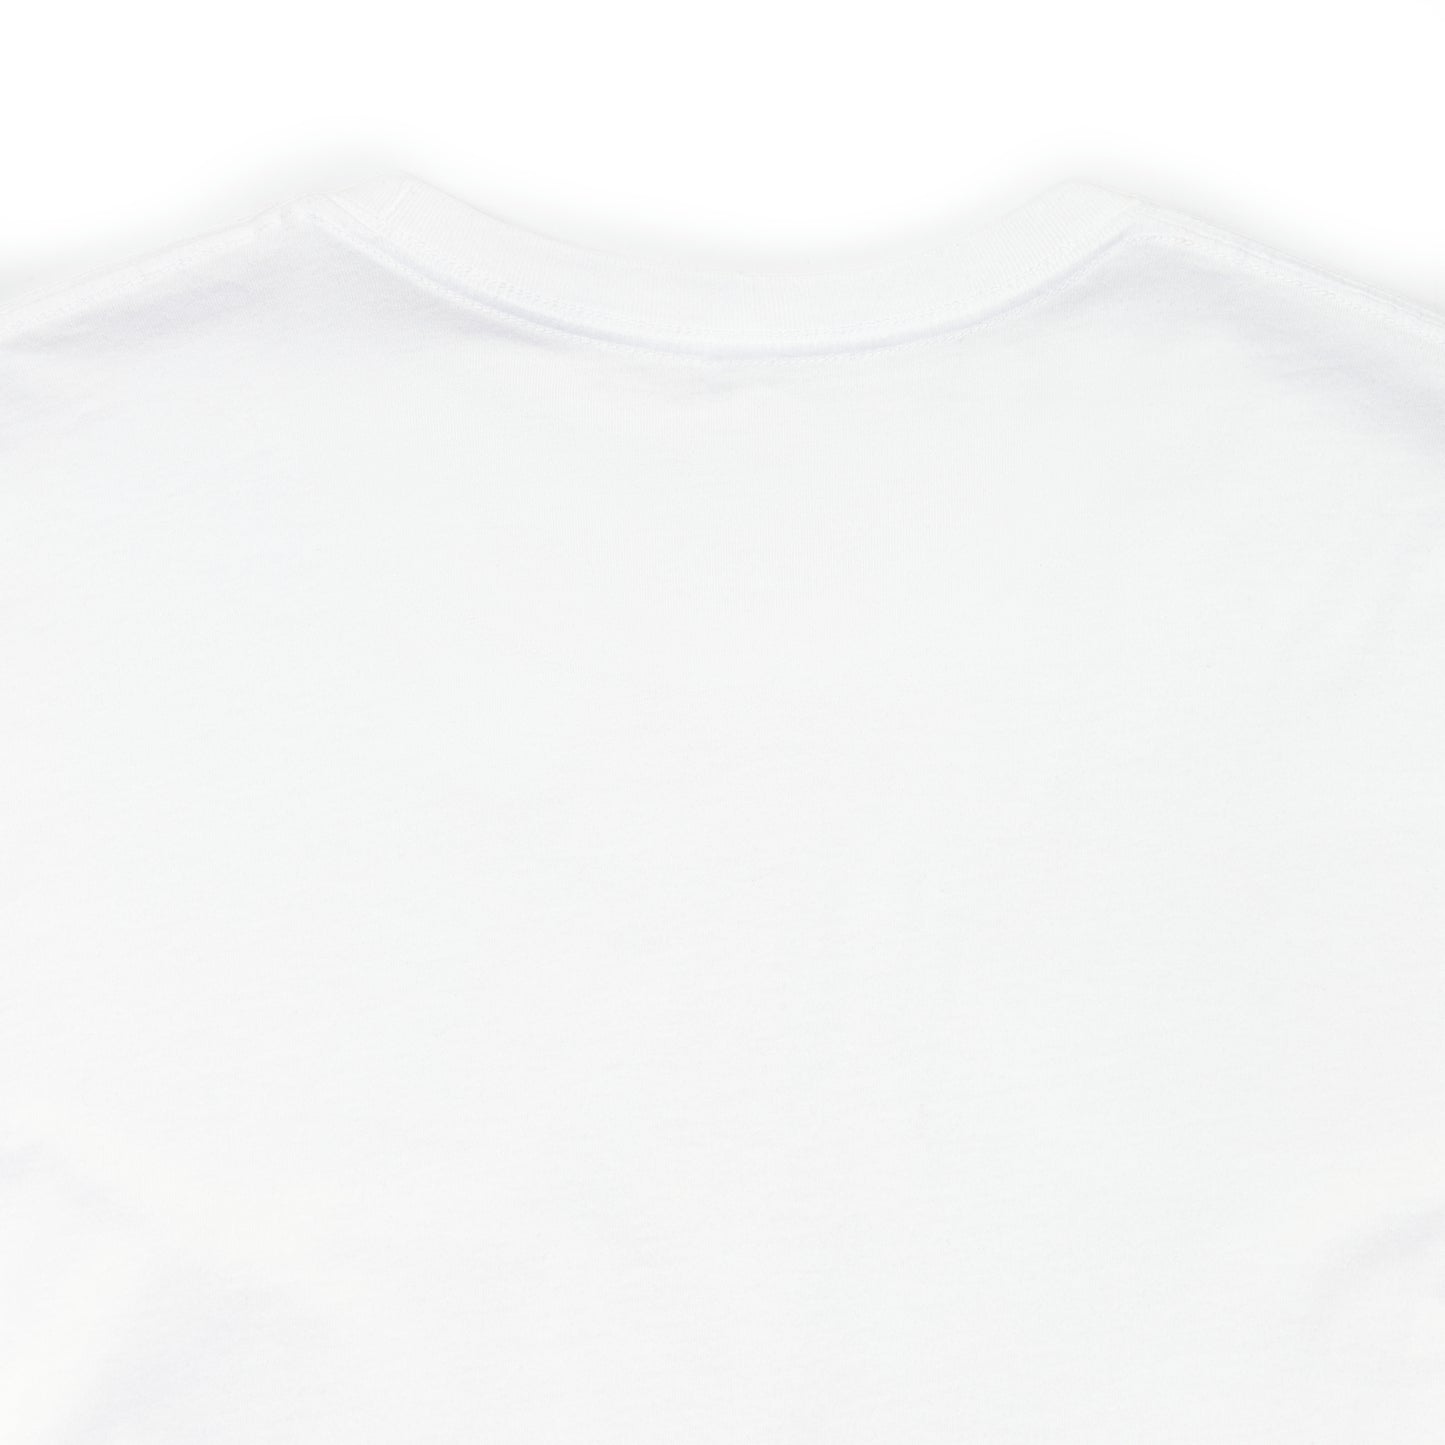 BLACK | 1865 | CELEBRATE FREEDOM Short Sleeve Premium T-Shirt | Embedded Distressed Flag